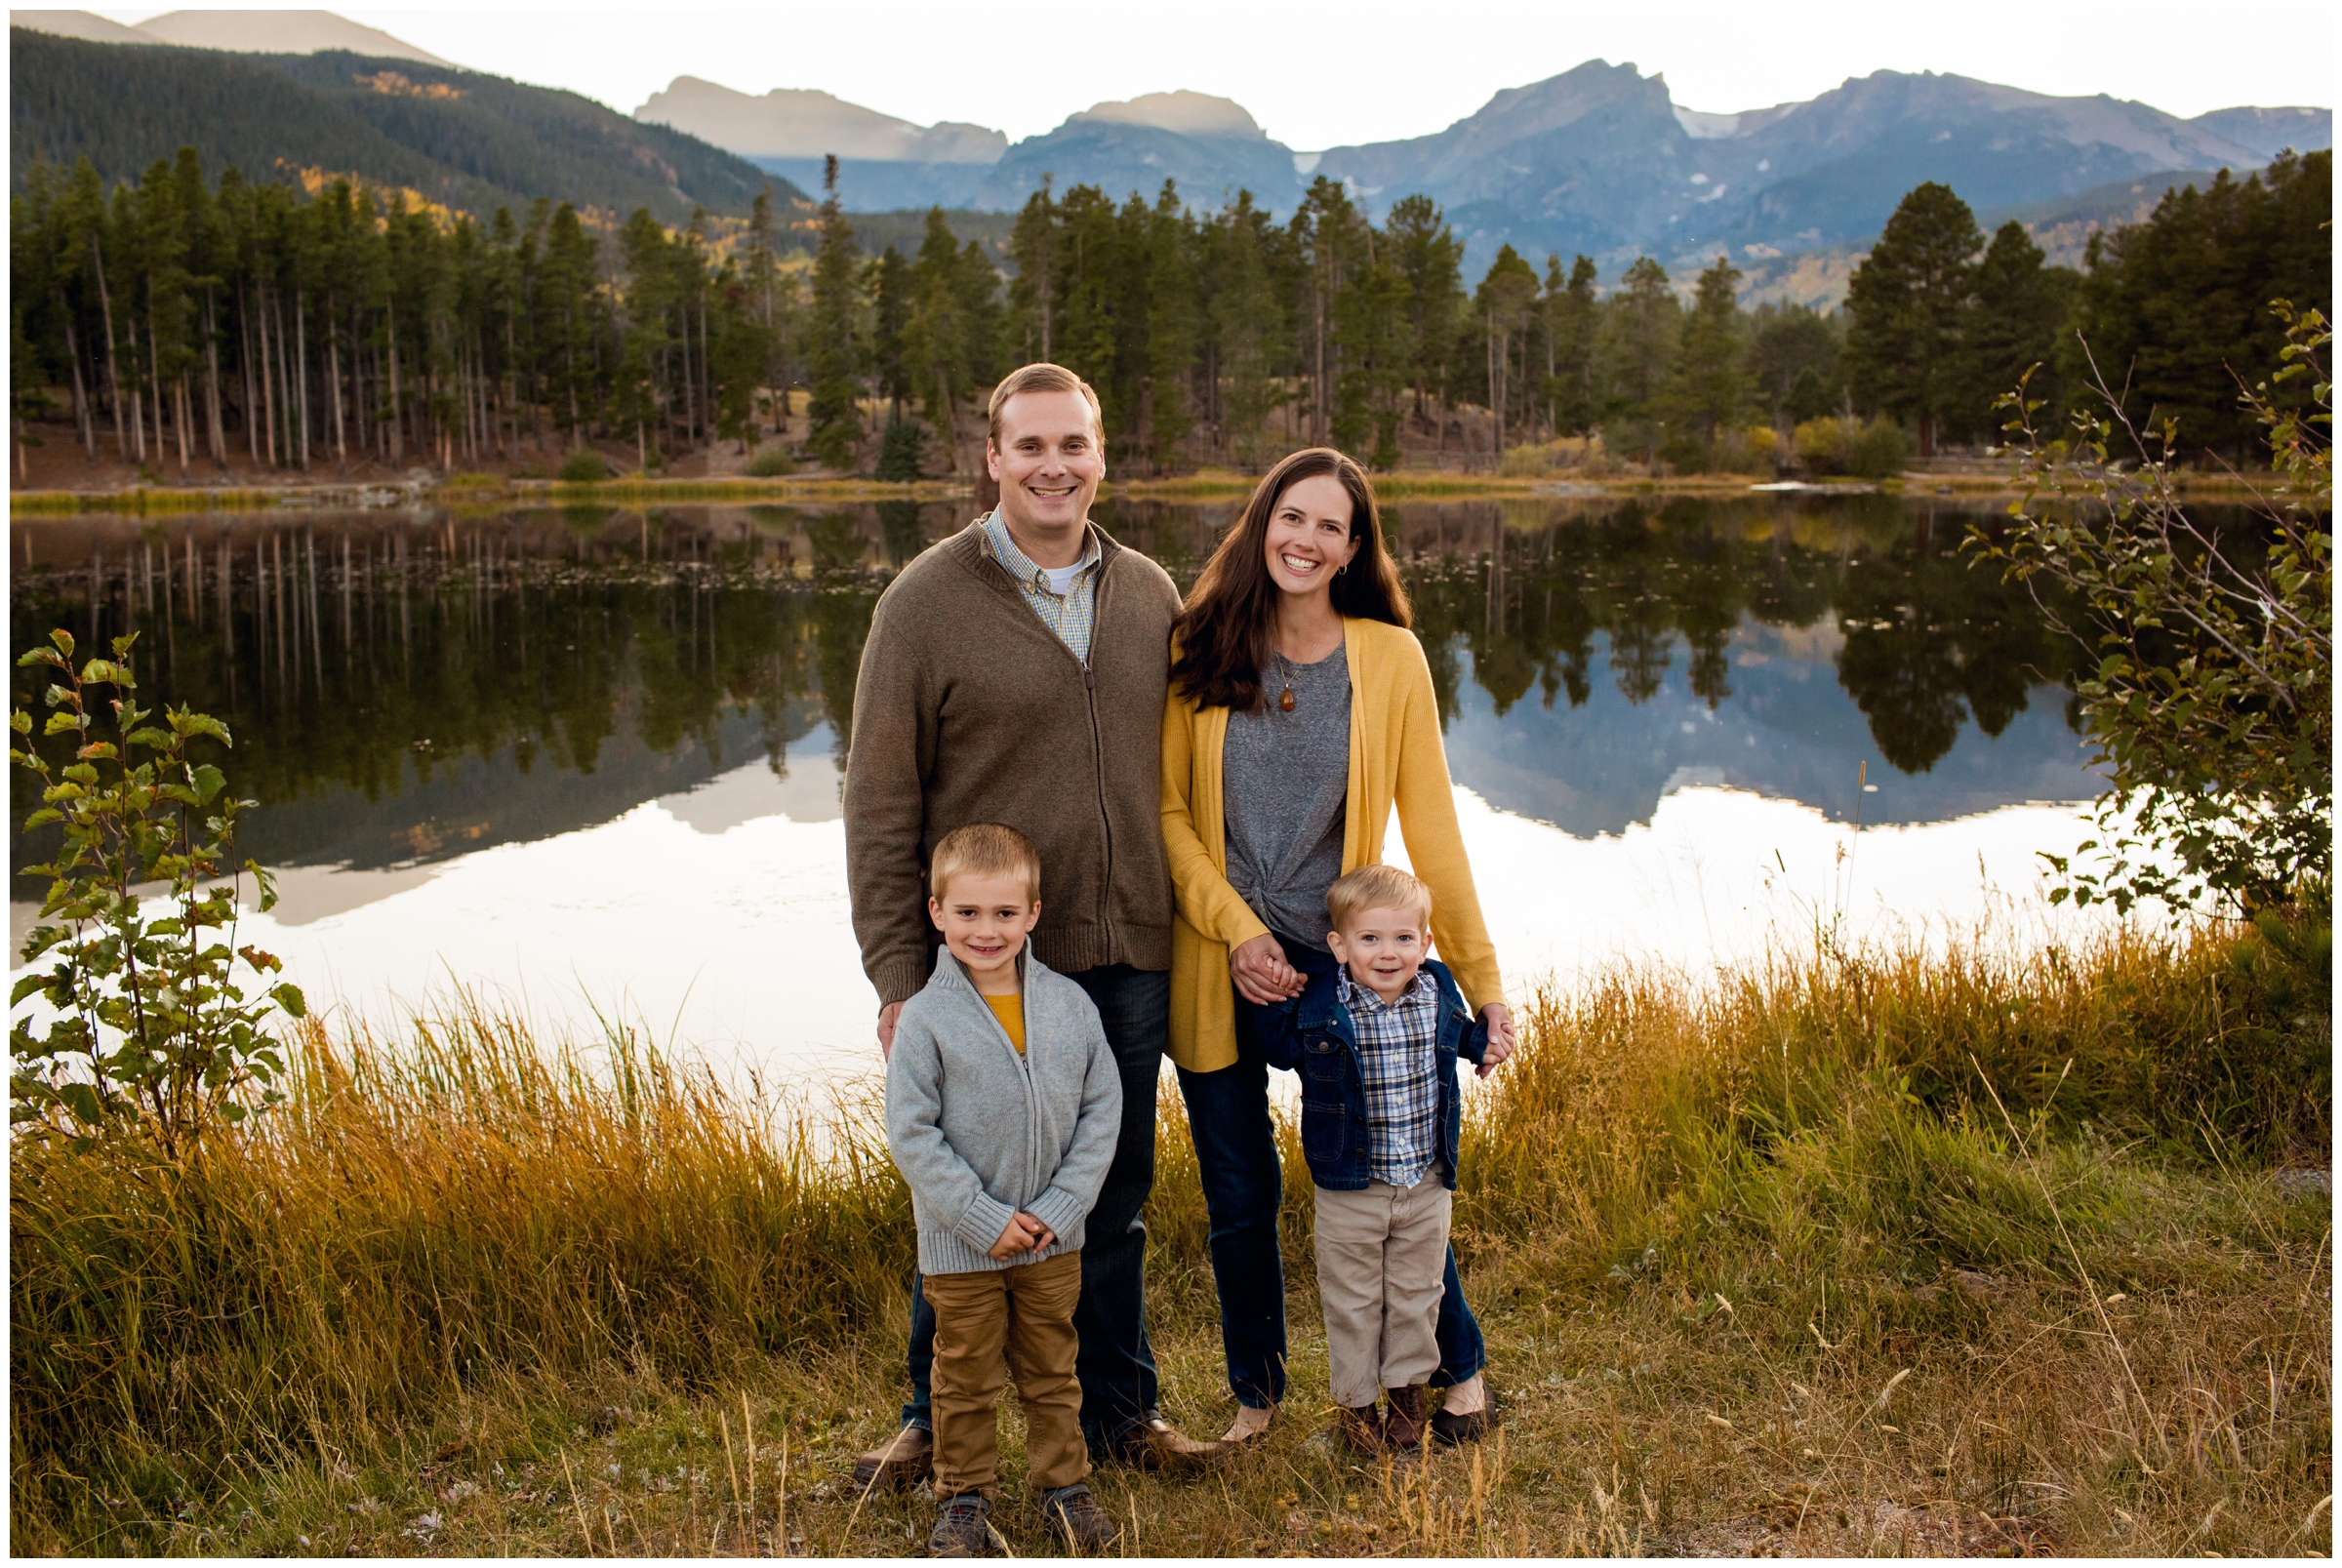 Estes Park family photography at Sprague Lake in Rocky Mountain National Park by Colorado portrait photographer Plum Pretty Photography